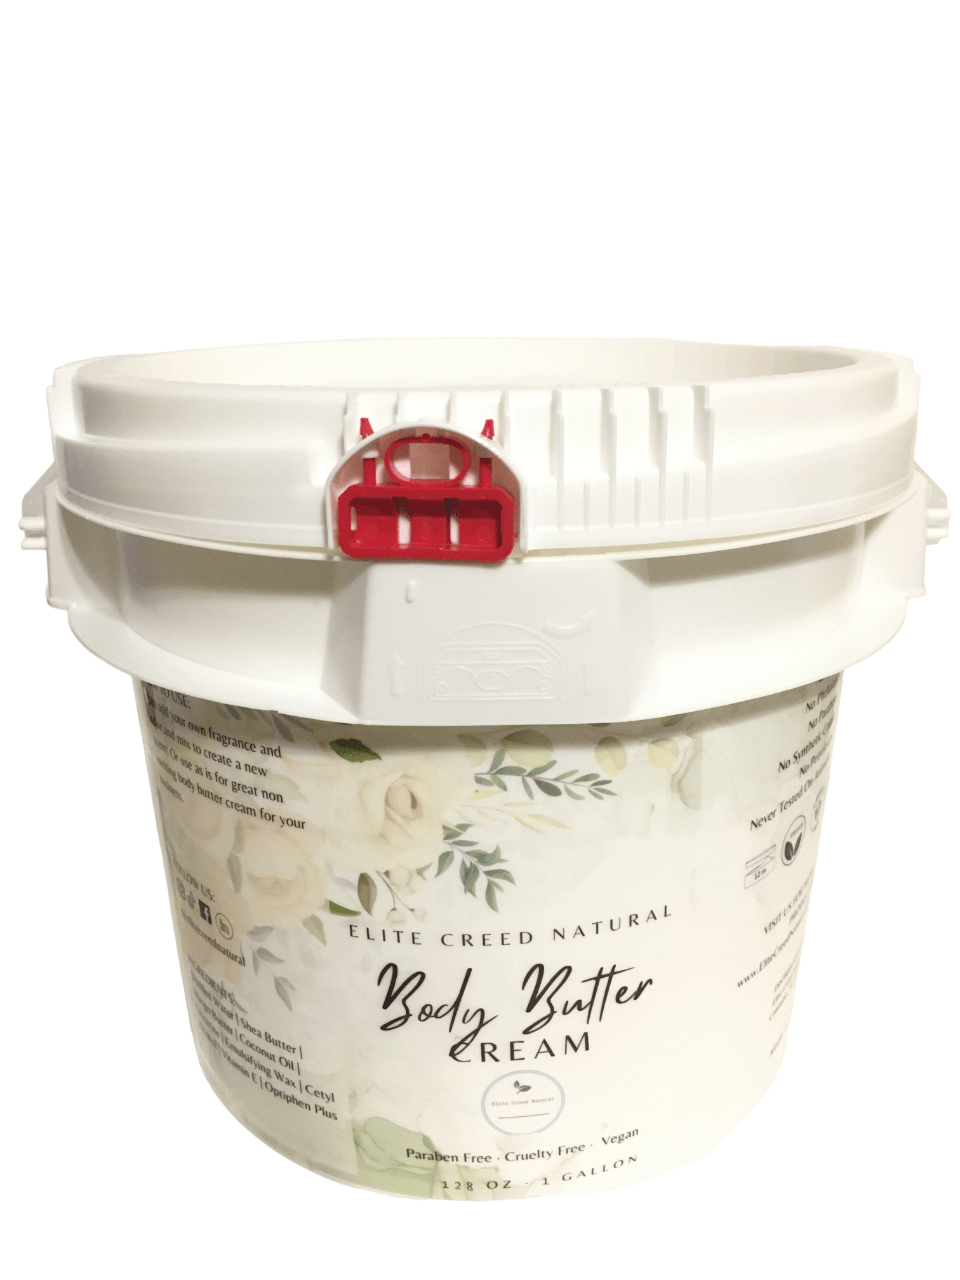 Wholesale Body Butter Cream Base